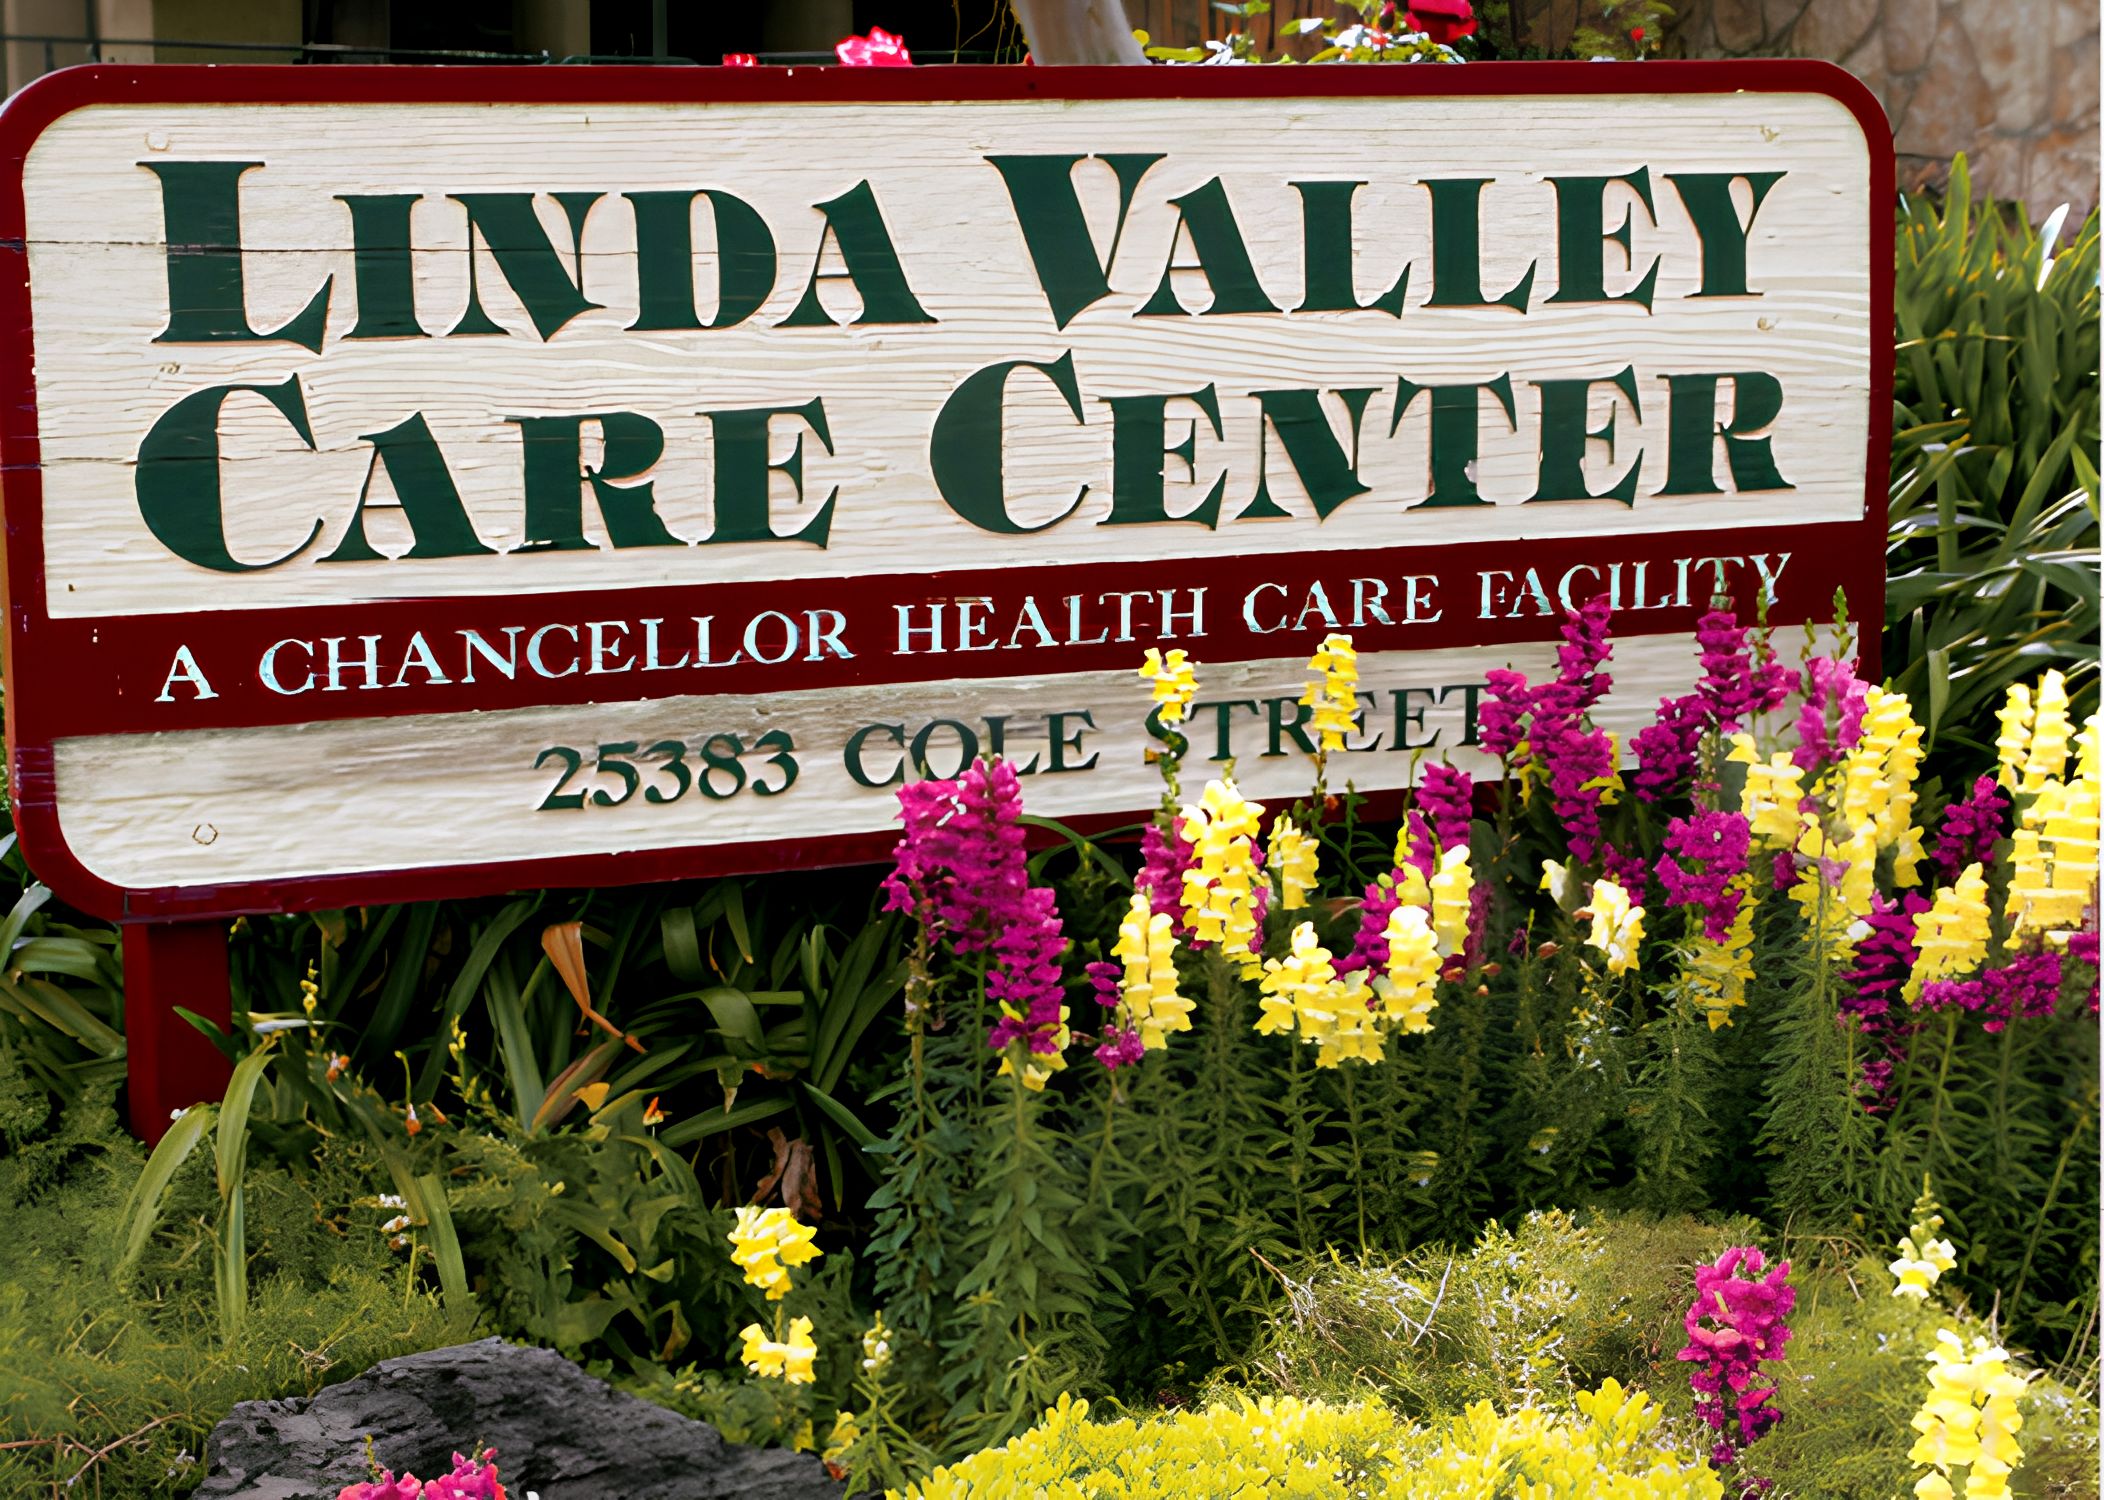 Linda Valley Care Center 2